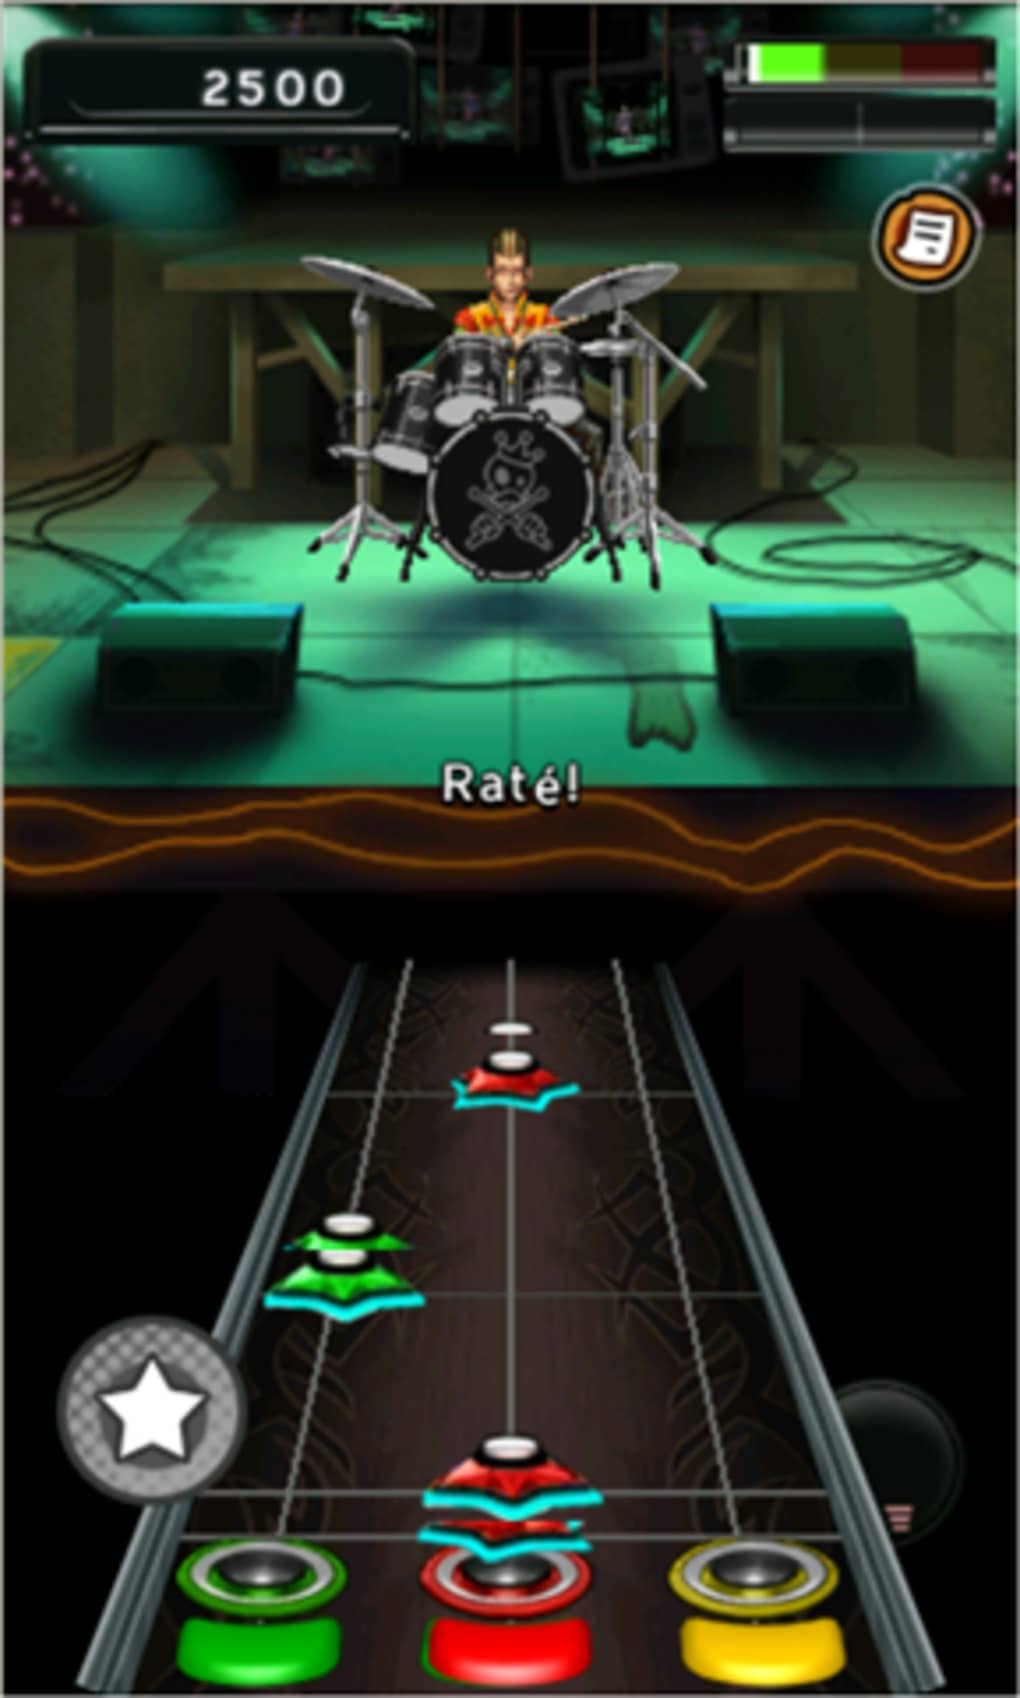 7 jogos no estilo Guitar Hero para celular - Canaltech